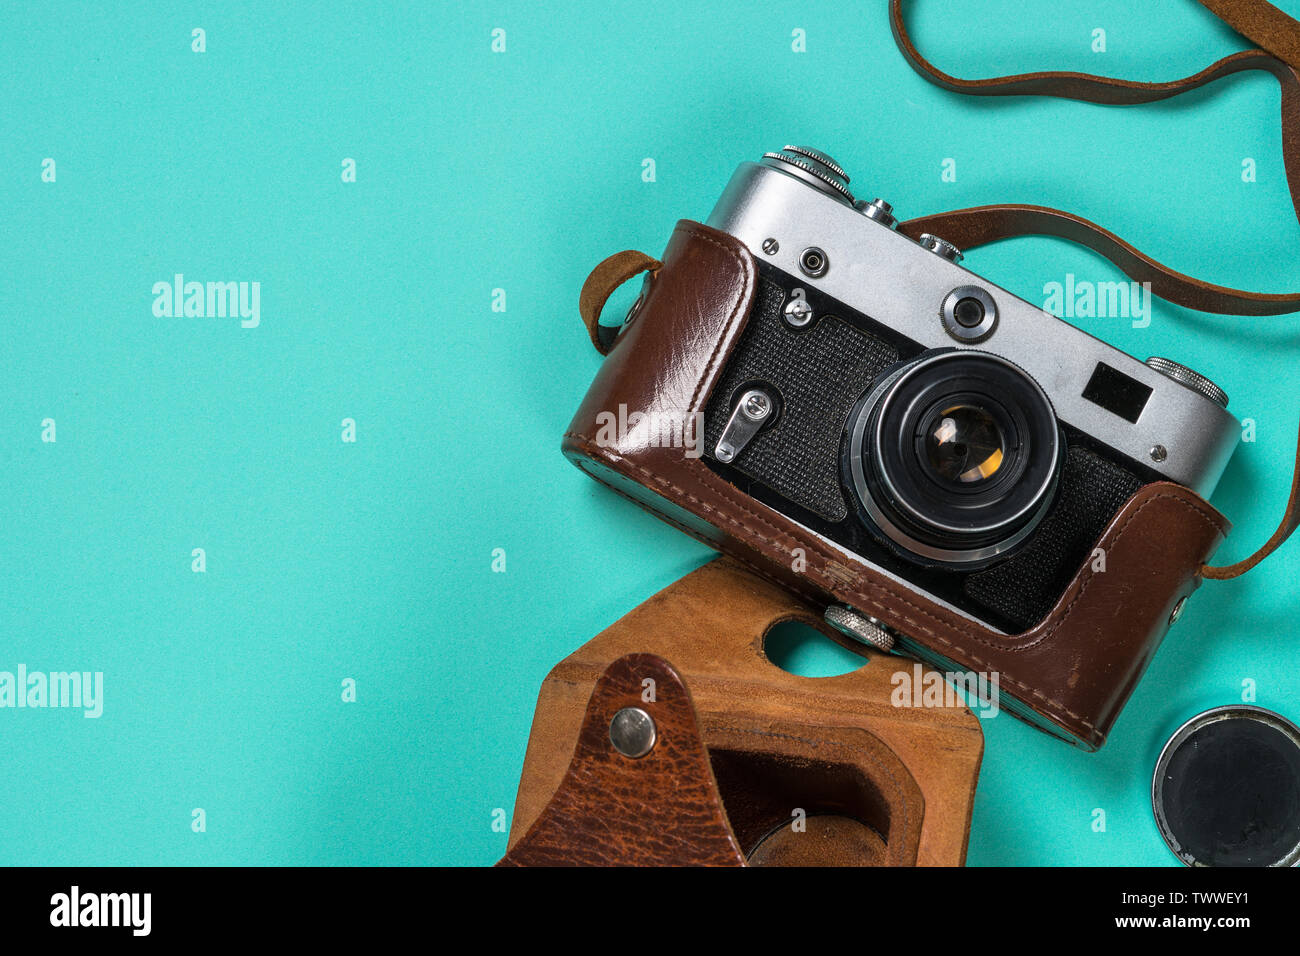 Old film camera on turquoise background. Stock Photo